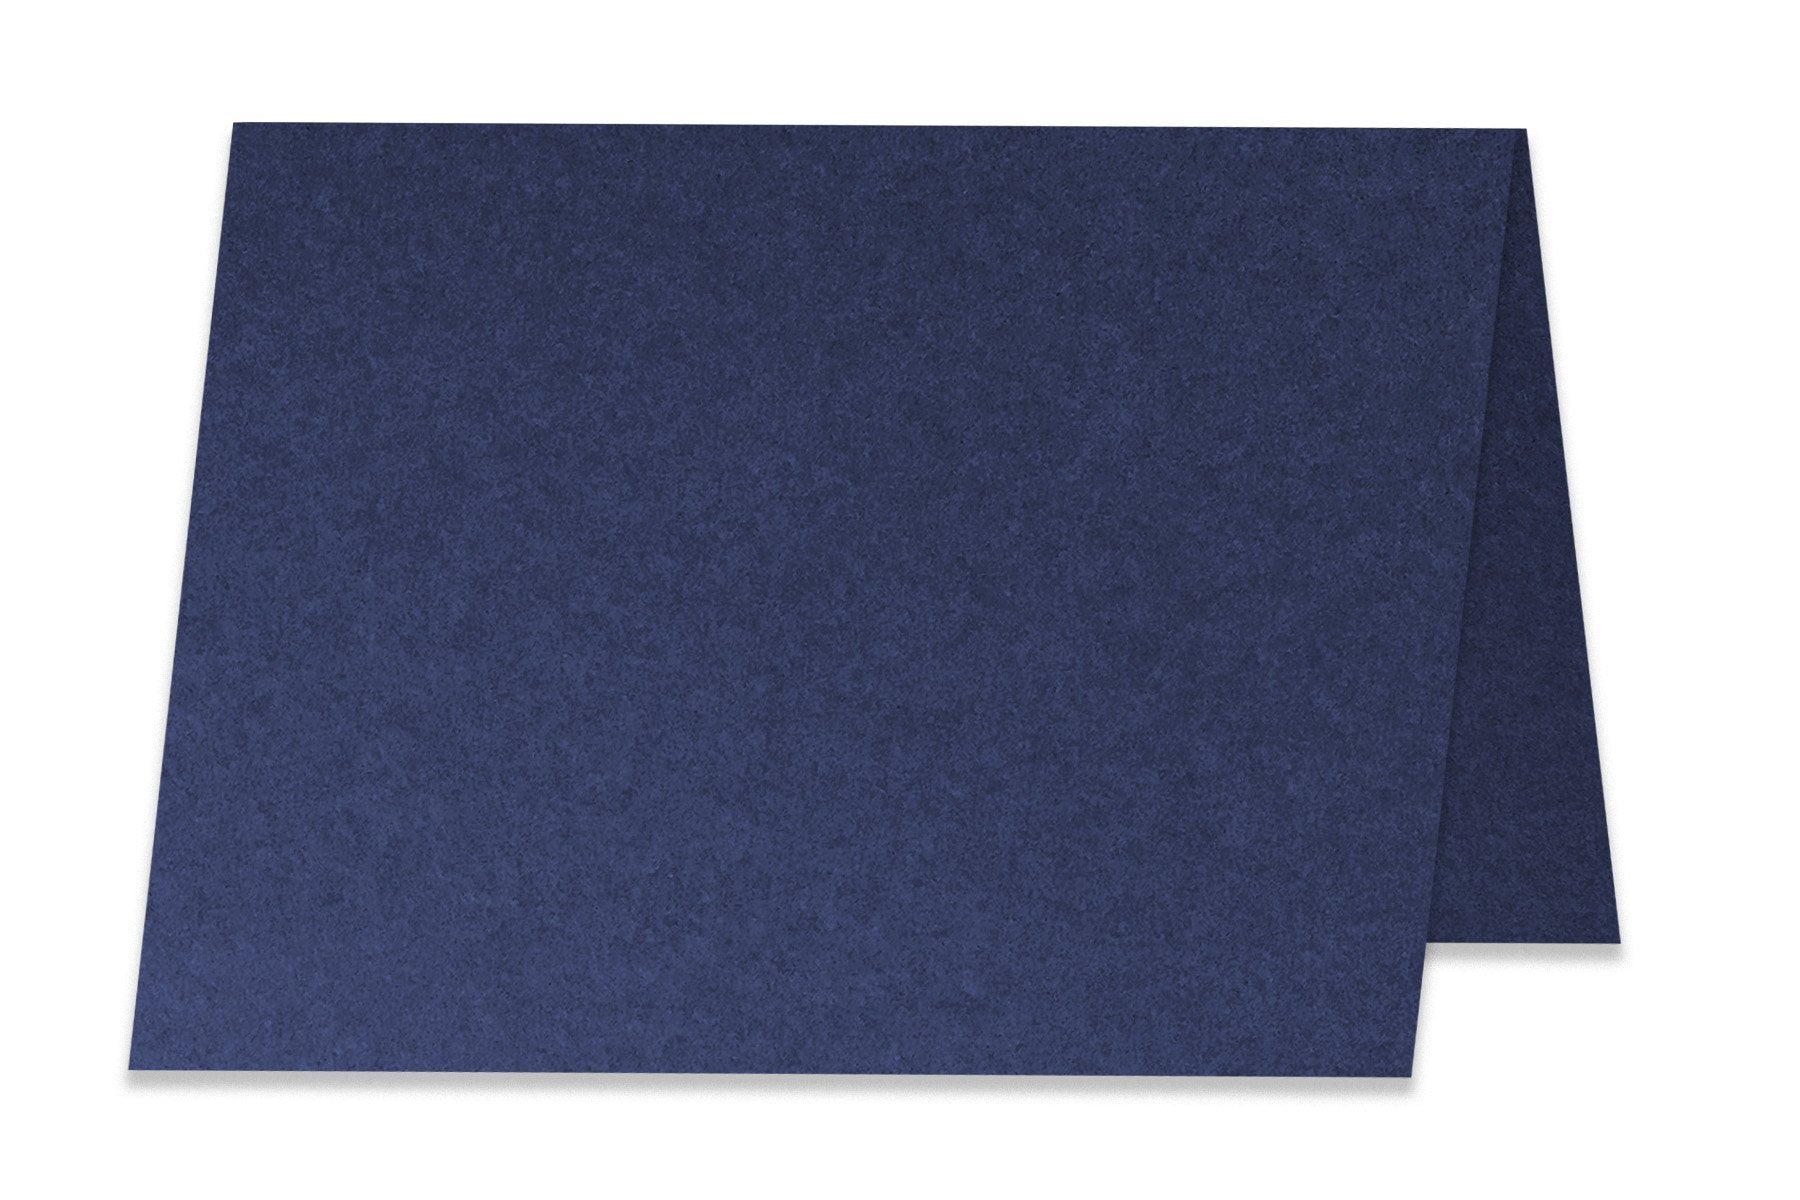 Tiffany Blue 5x7 Cardstock For Invitations 